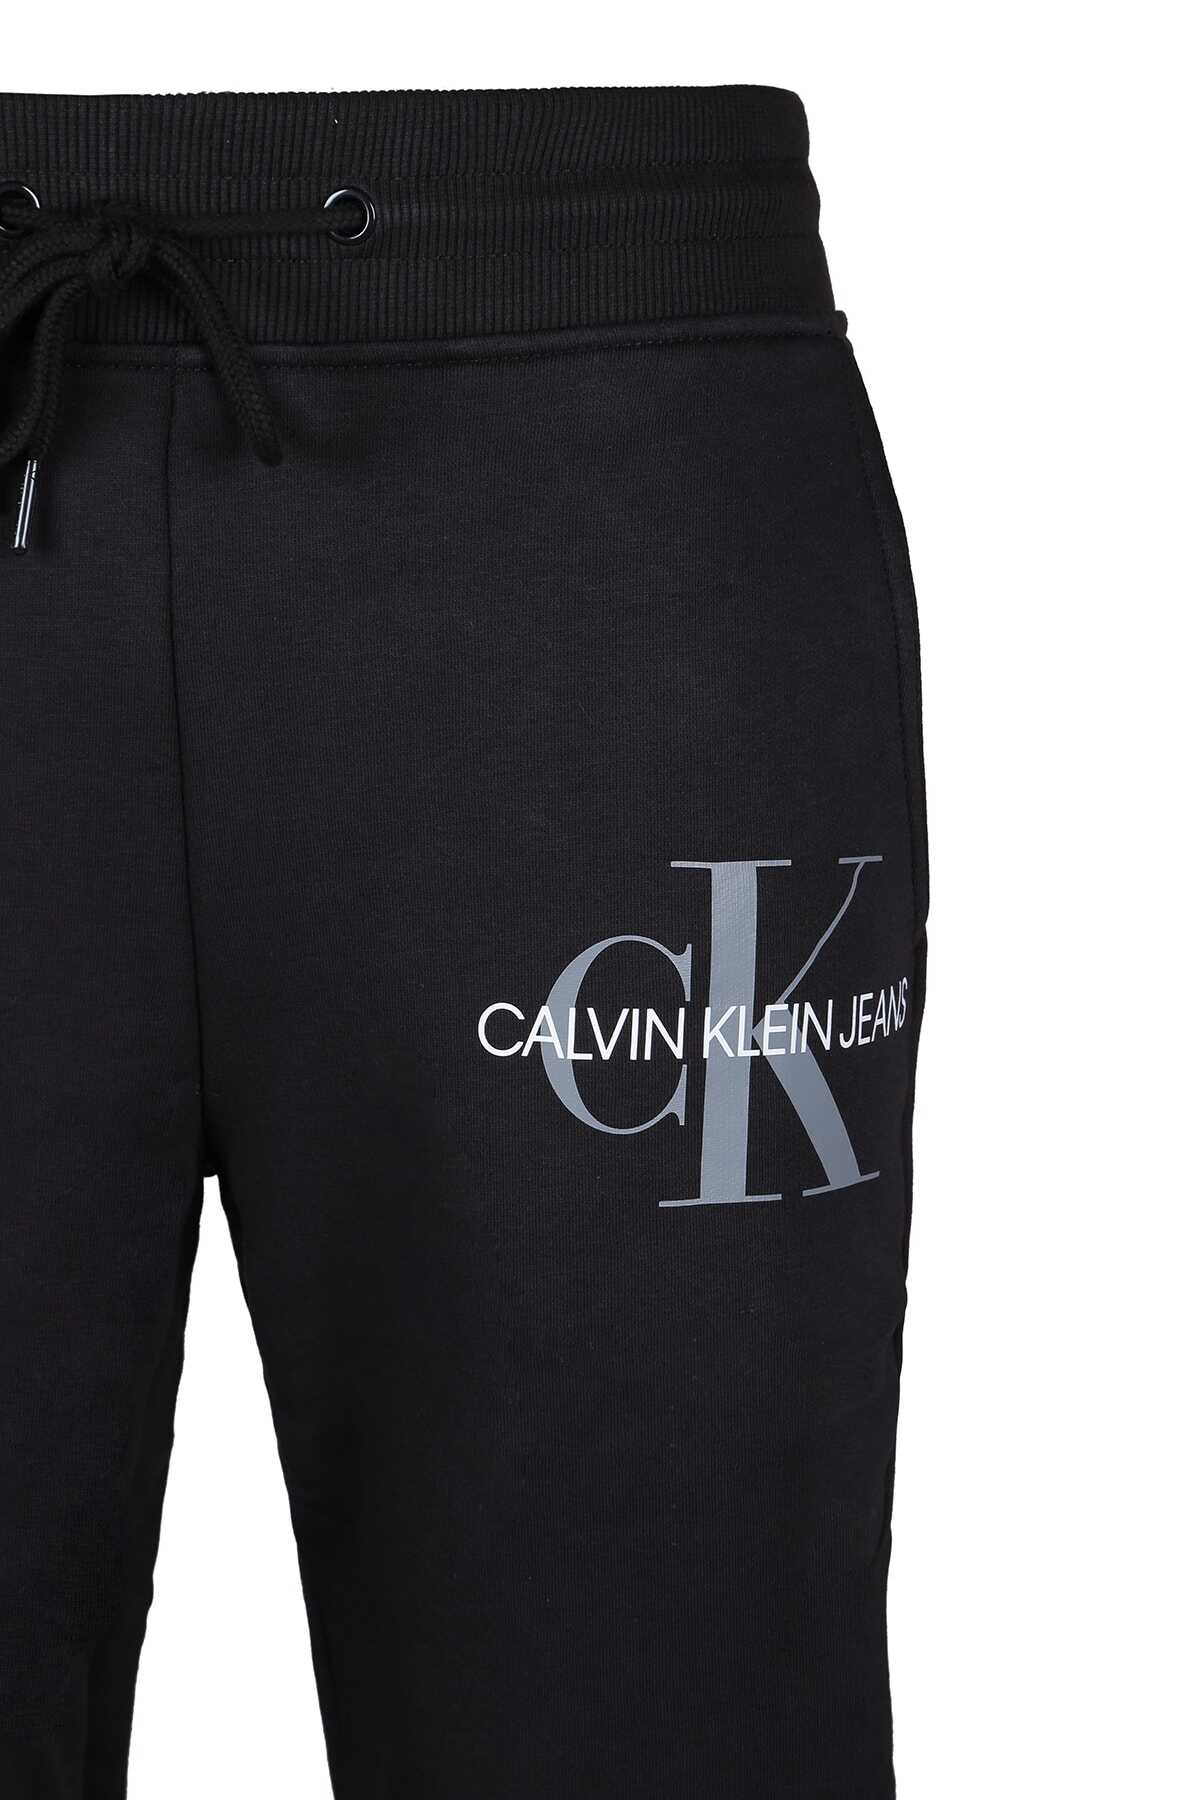 شلوار ورزشی مردانه کمرکش مشکی برند Calvin Klein 